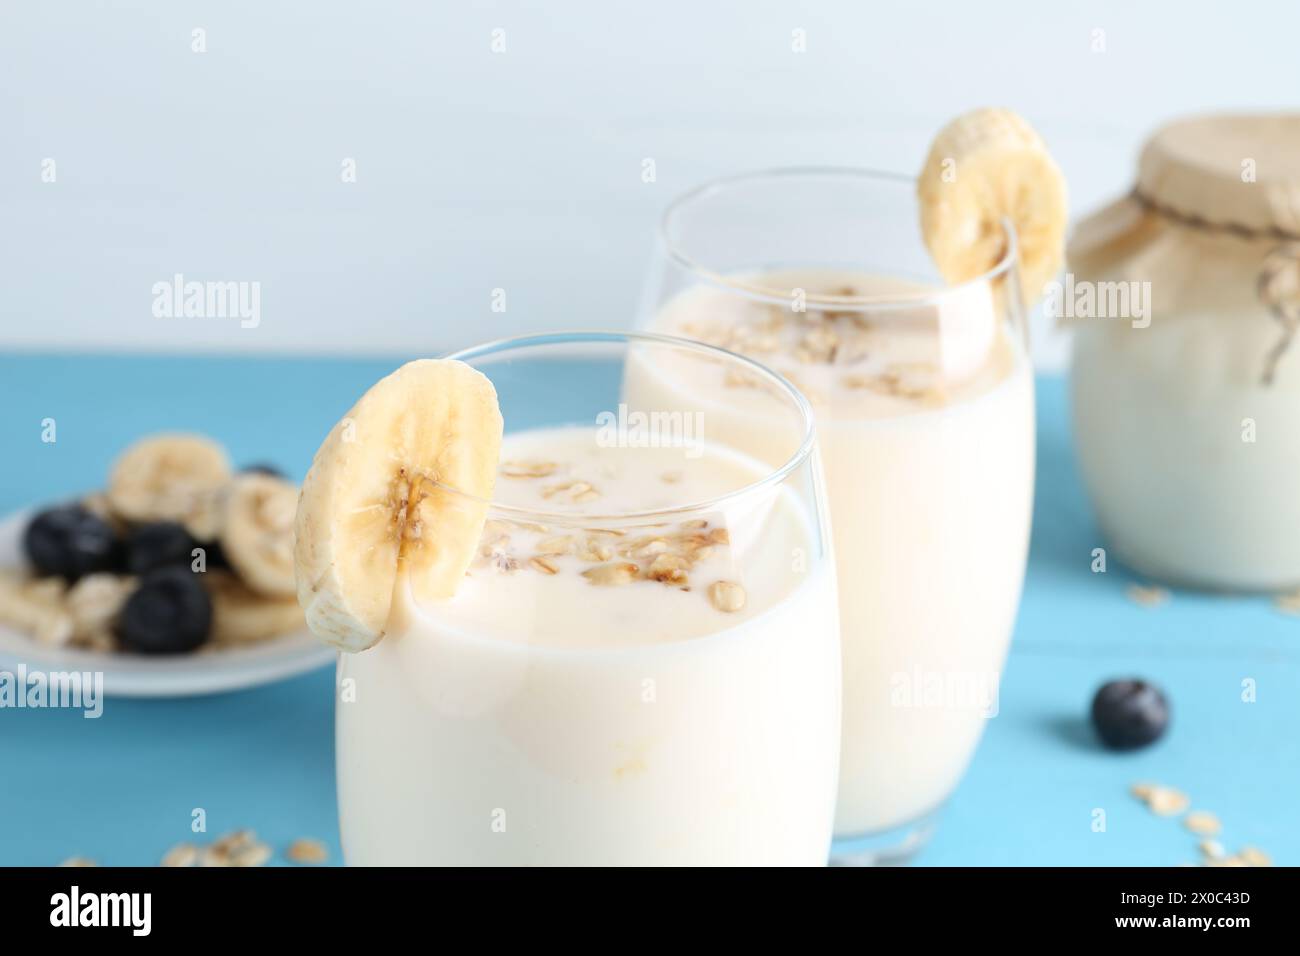 Tasty yogurt in glasses, oats, banana and blueberries on light blue table, closeup Stock Photo